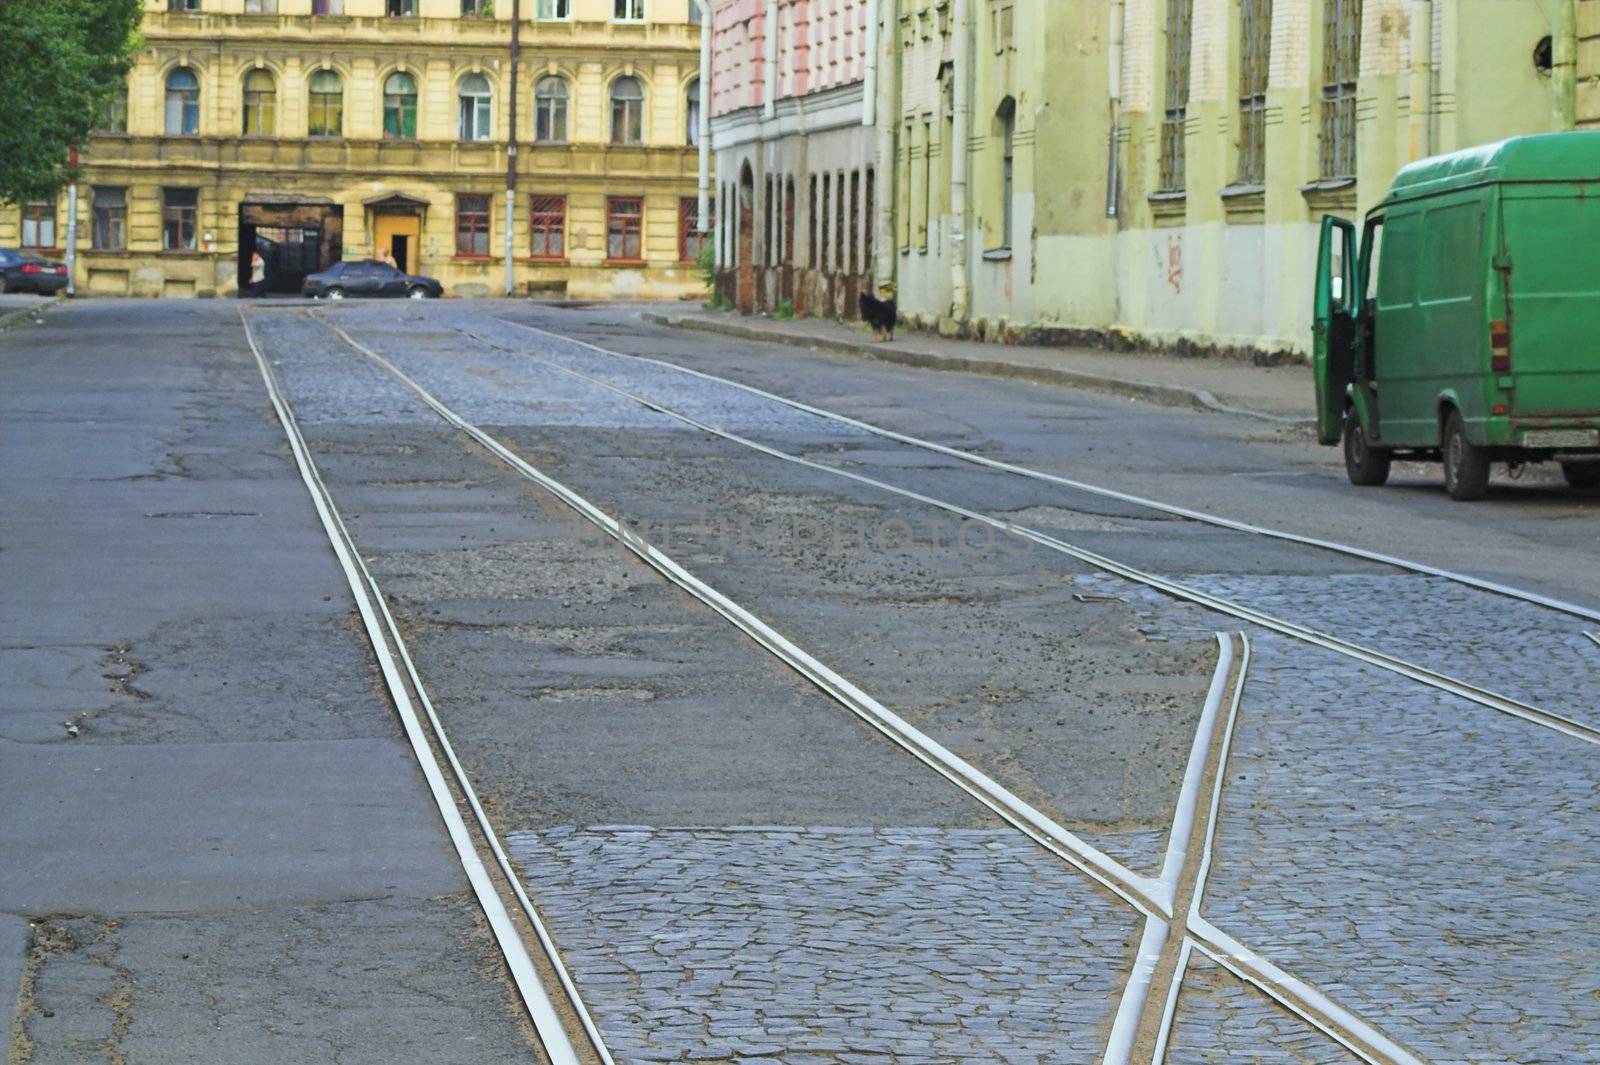 Tram lines at city street